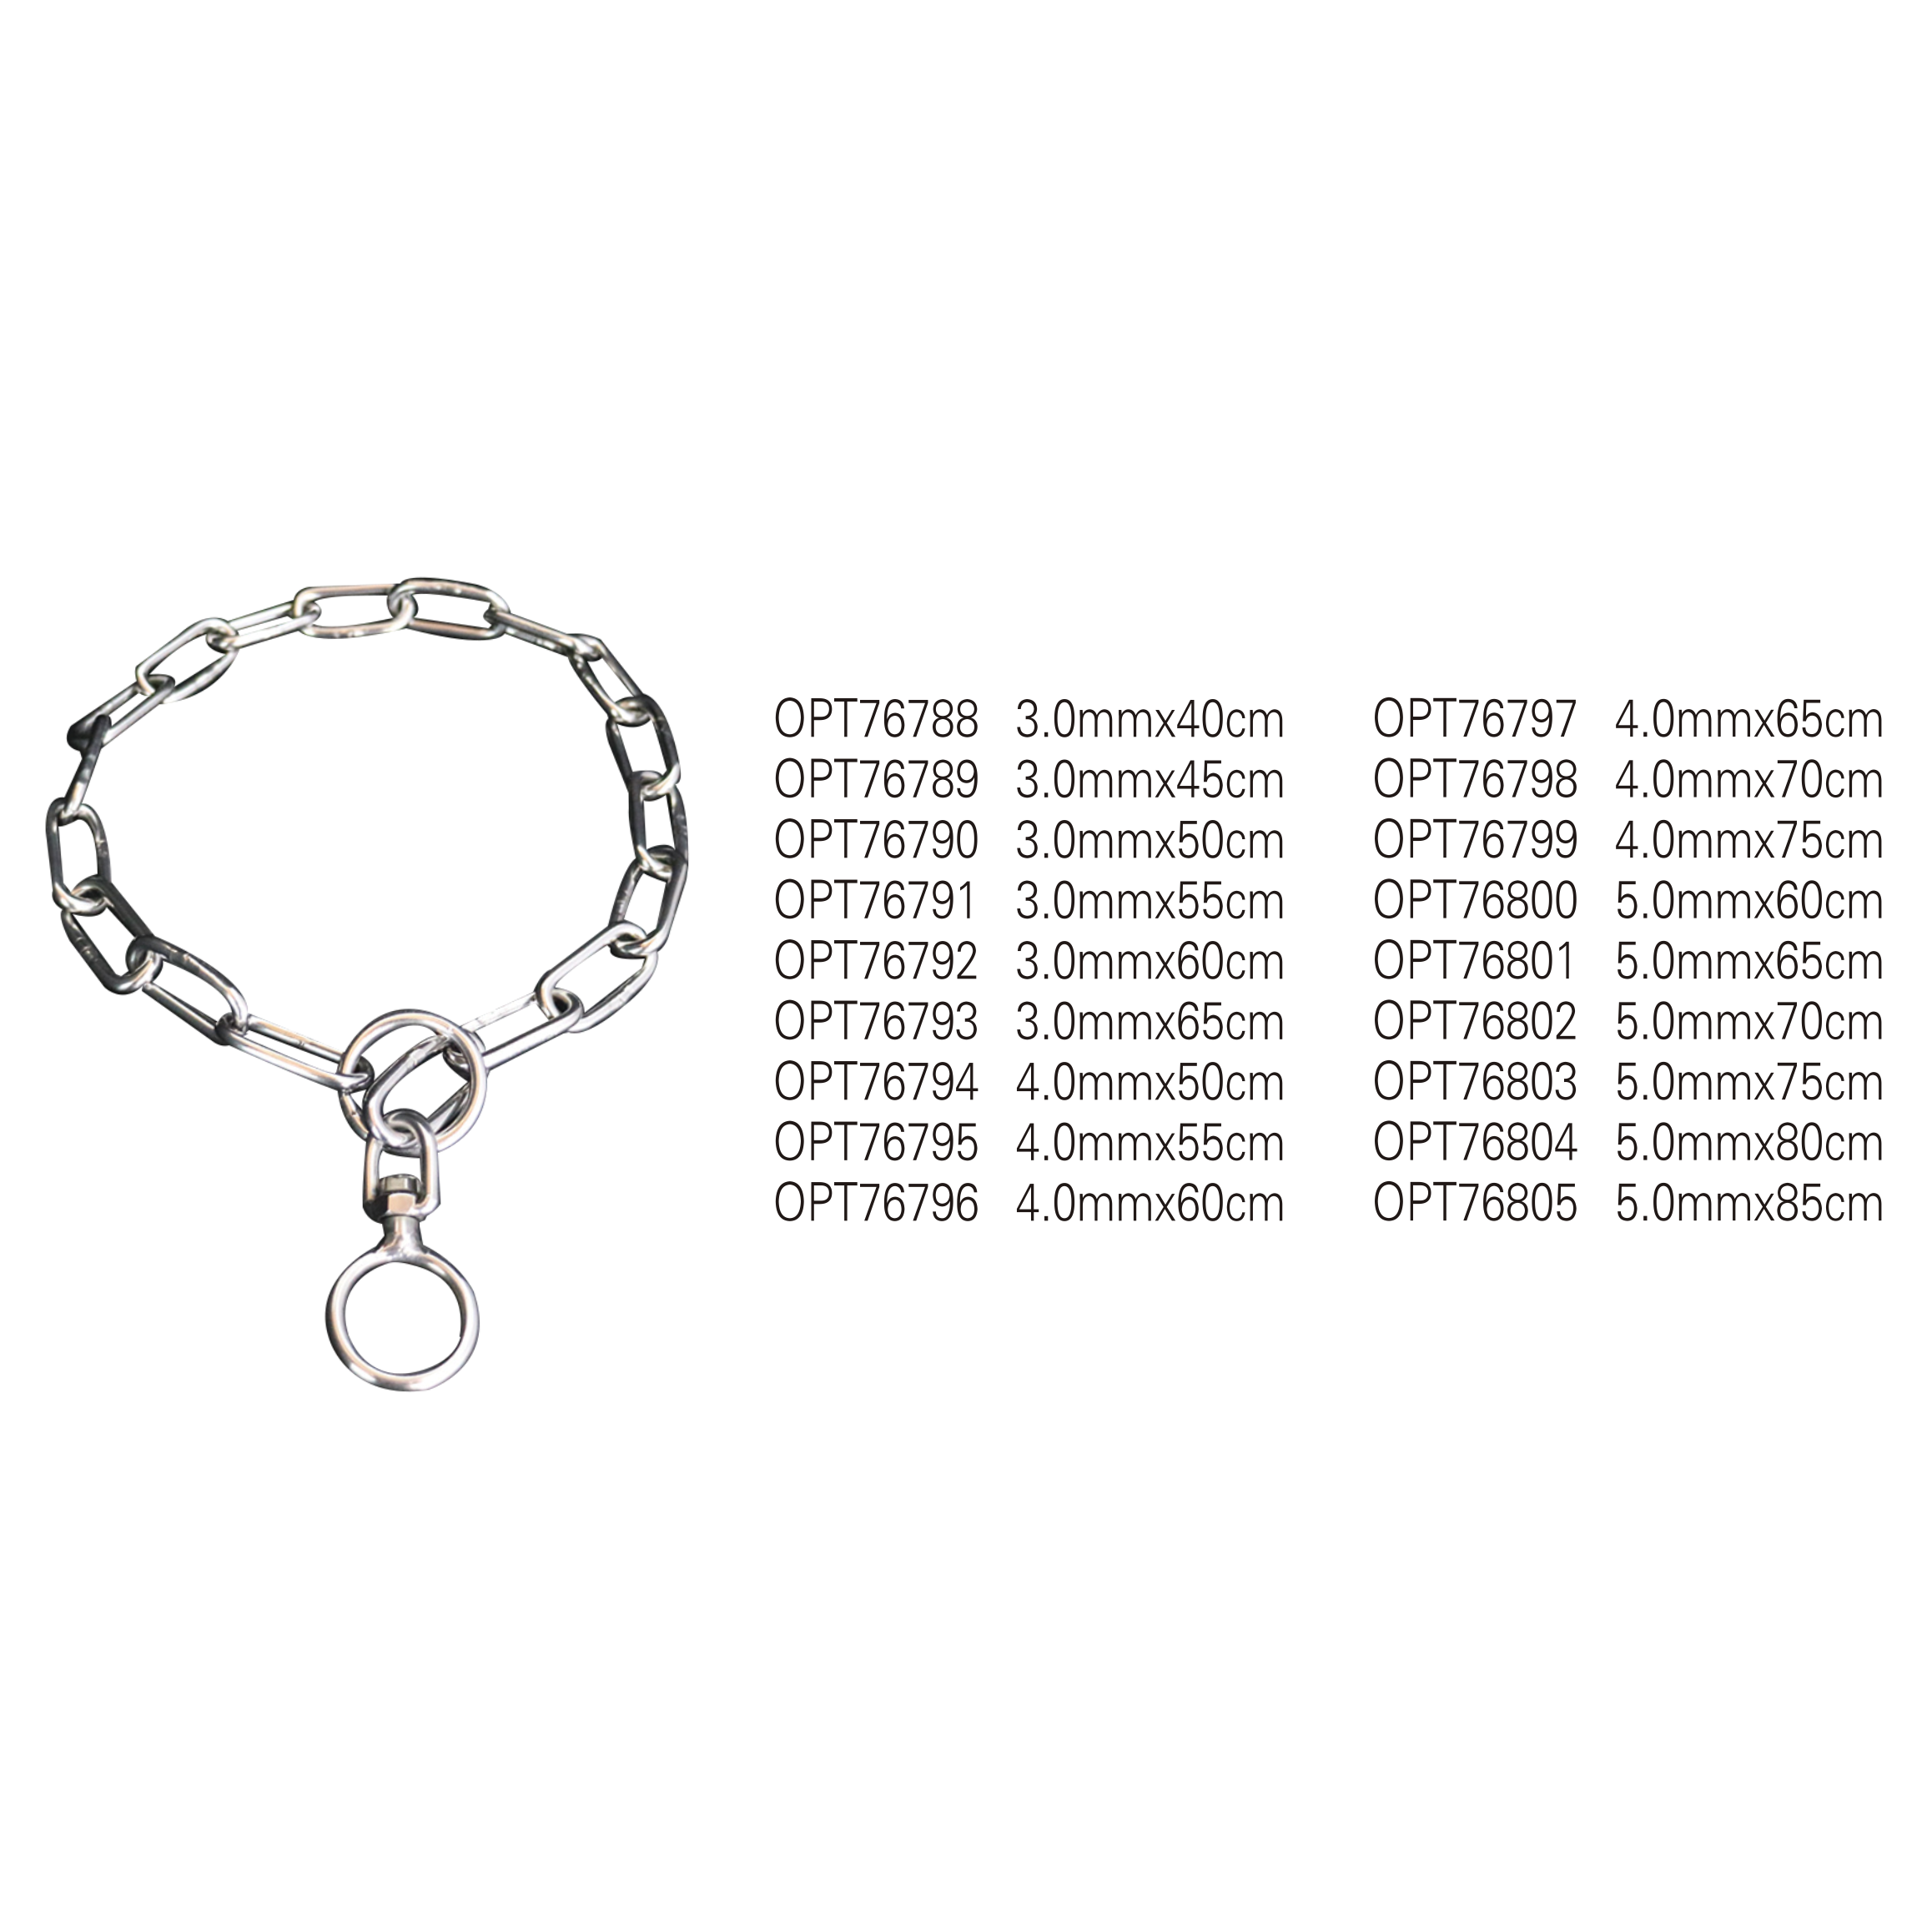 OPT76788-OPT76805 S.S.Choke chains